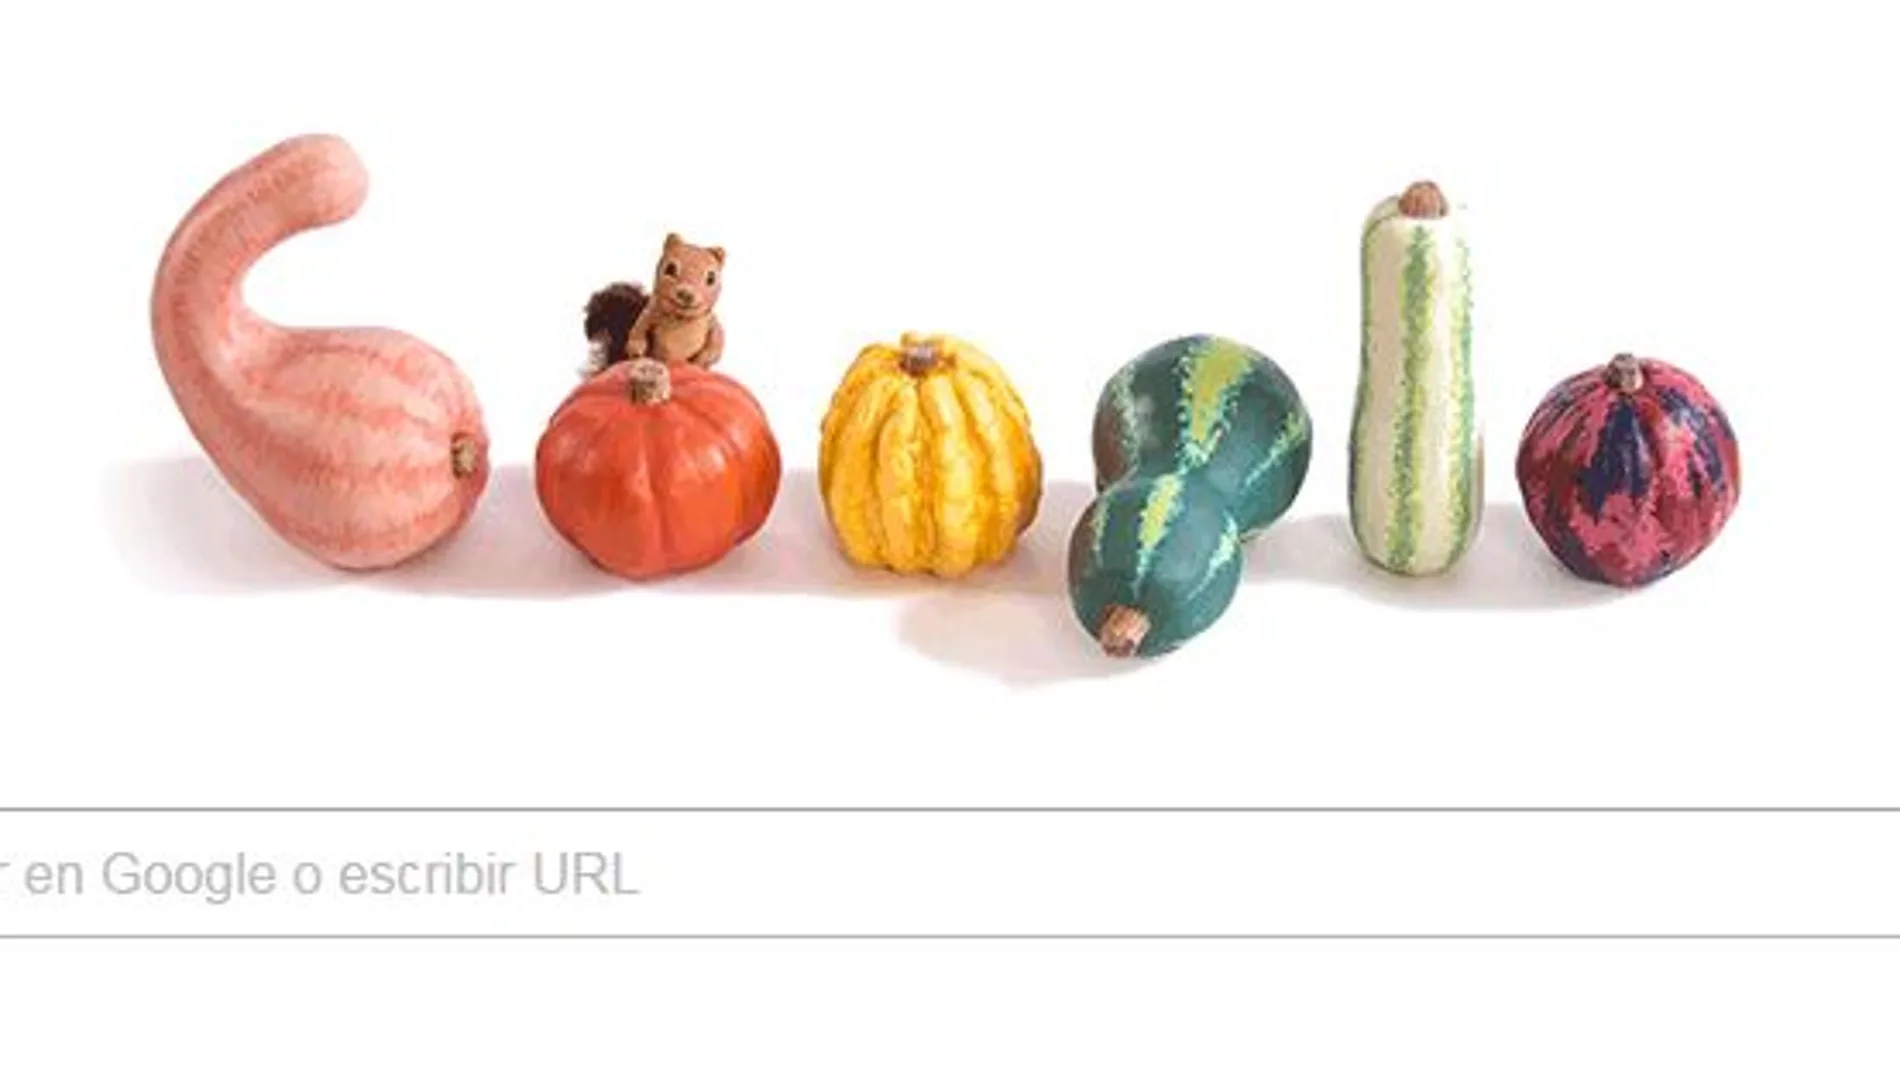 Google saluda al otoño